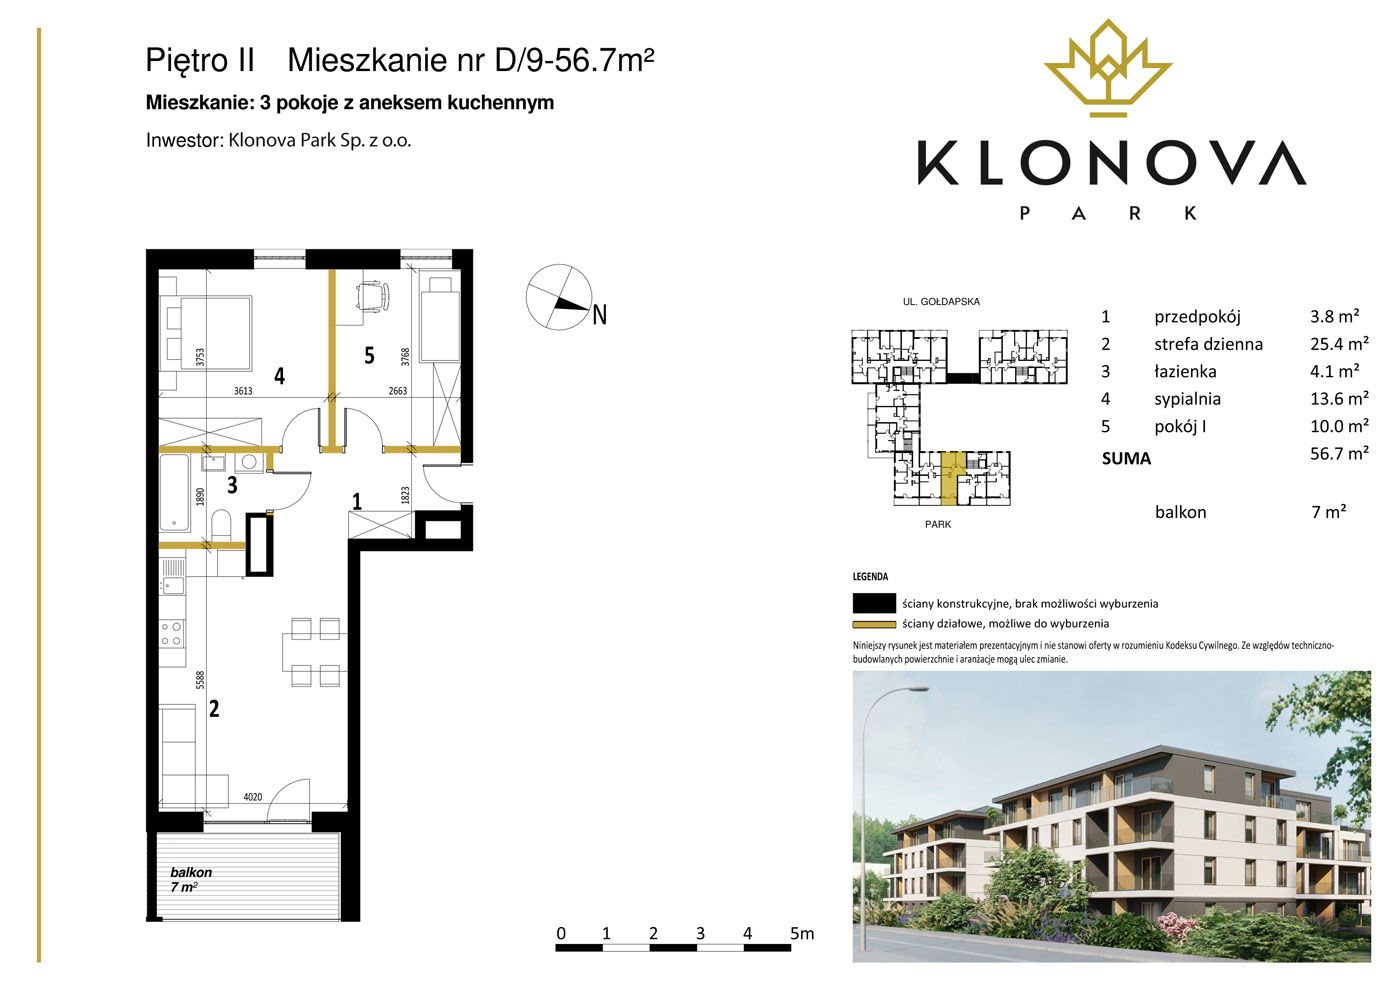 Apartamenty Klonova Park - Plan mieszkania D/9